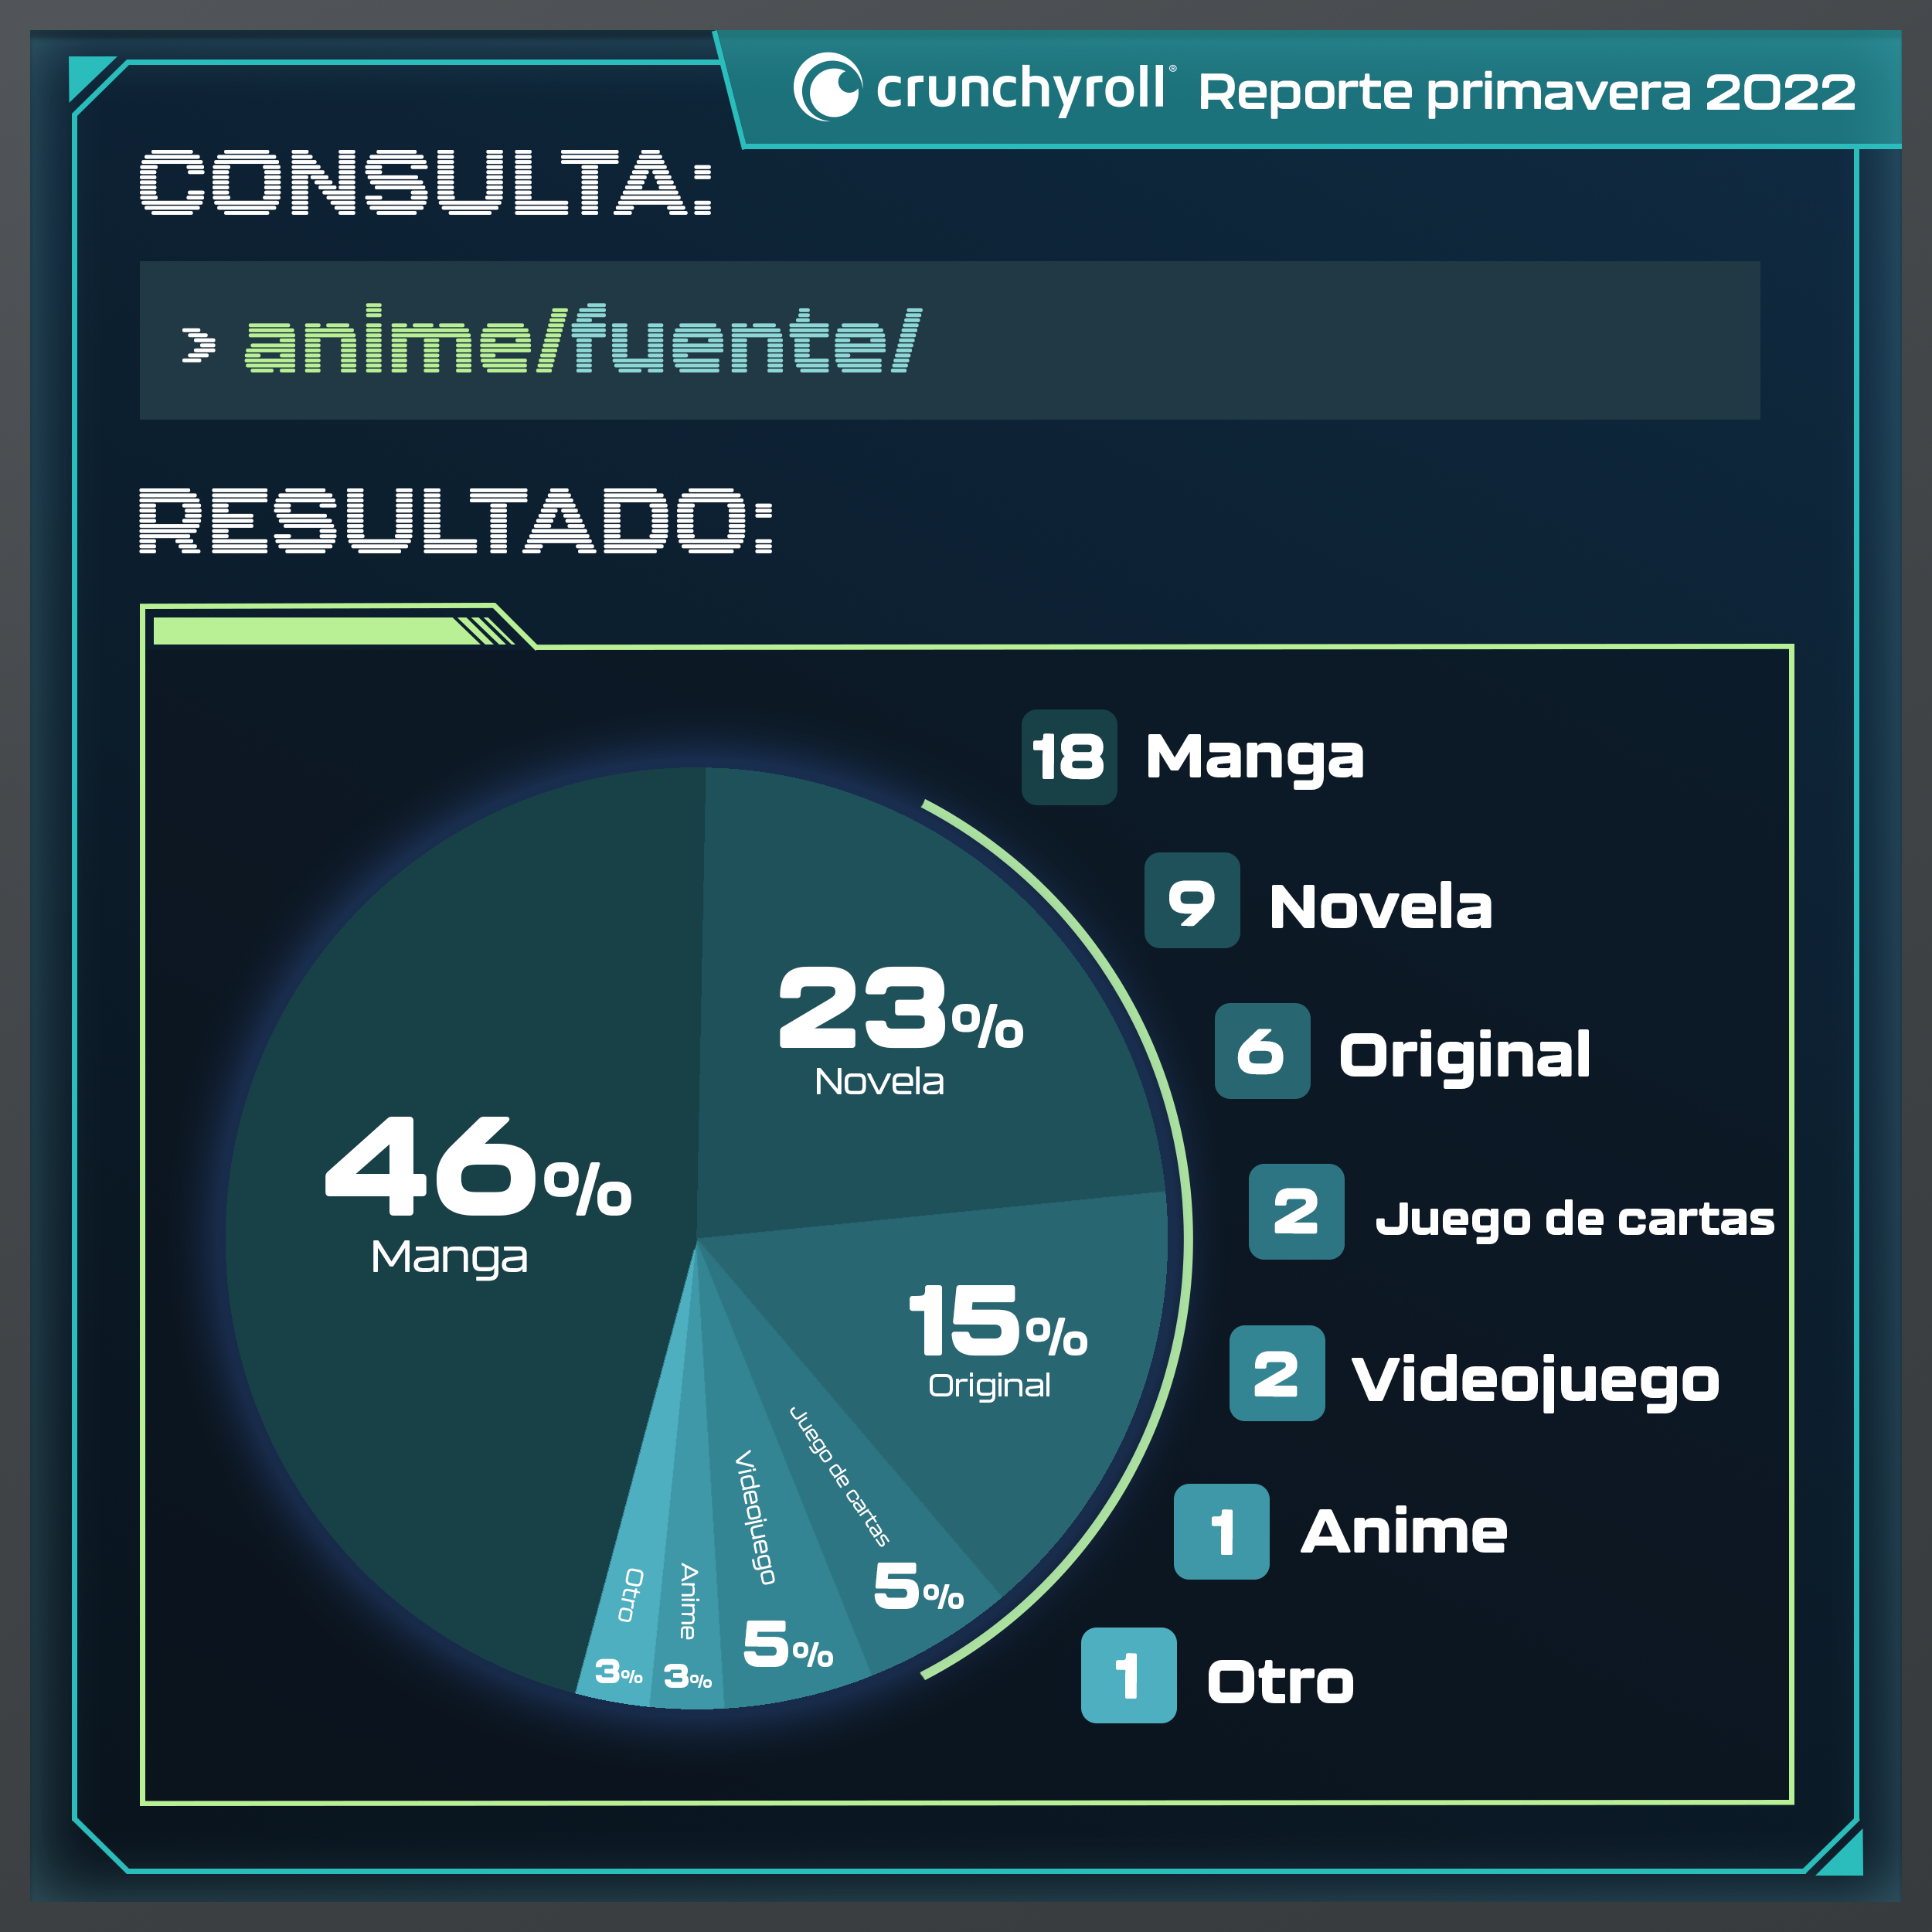 Crunchyroll Spring 2022 Analysis Anime Source